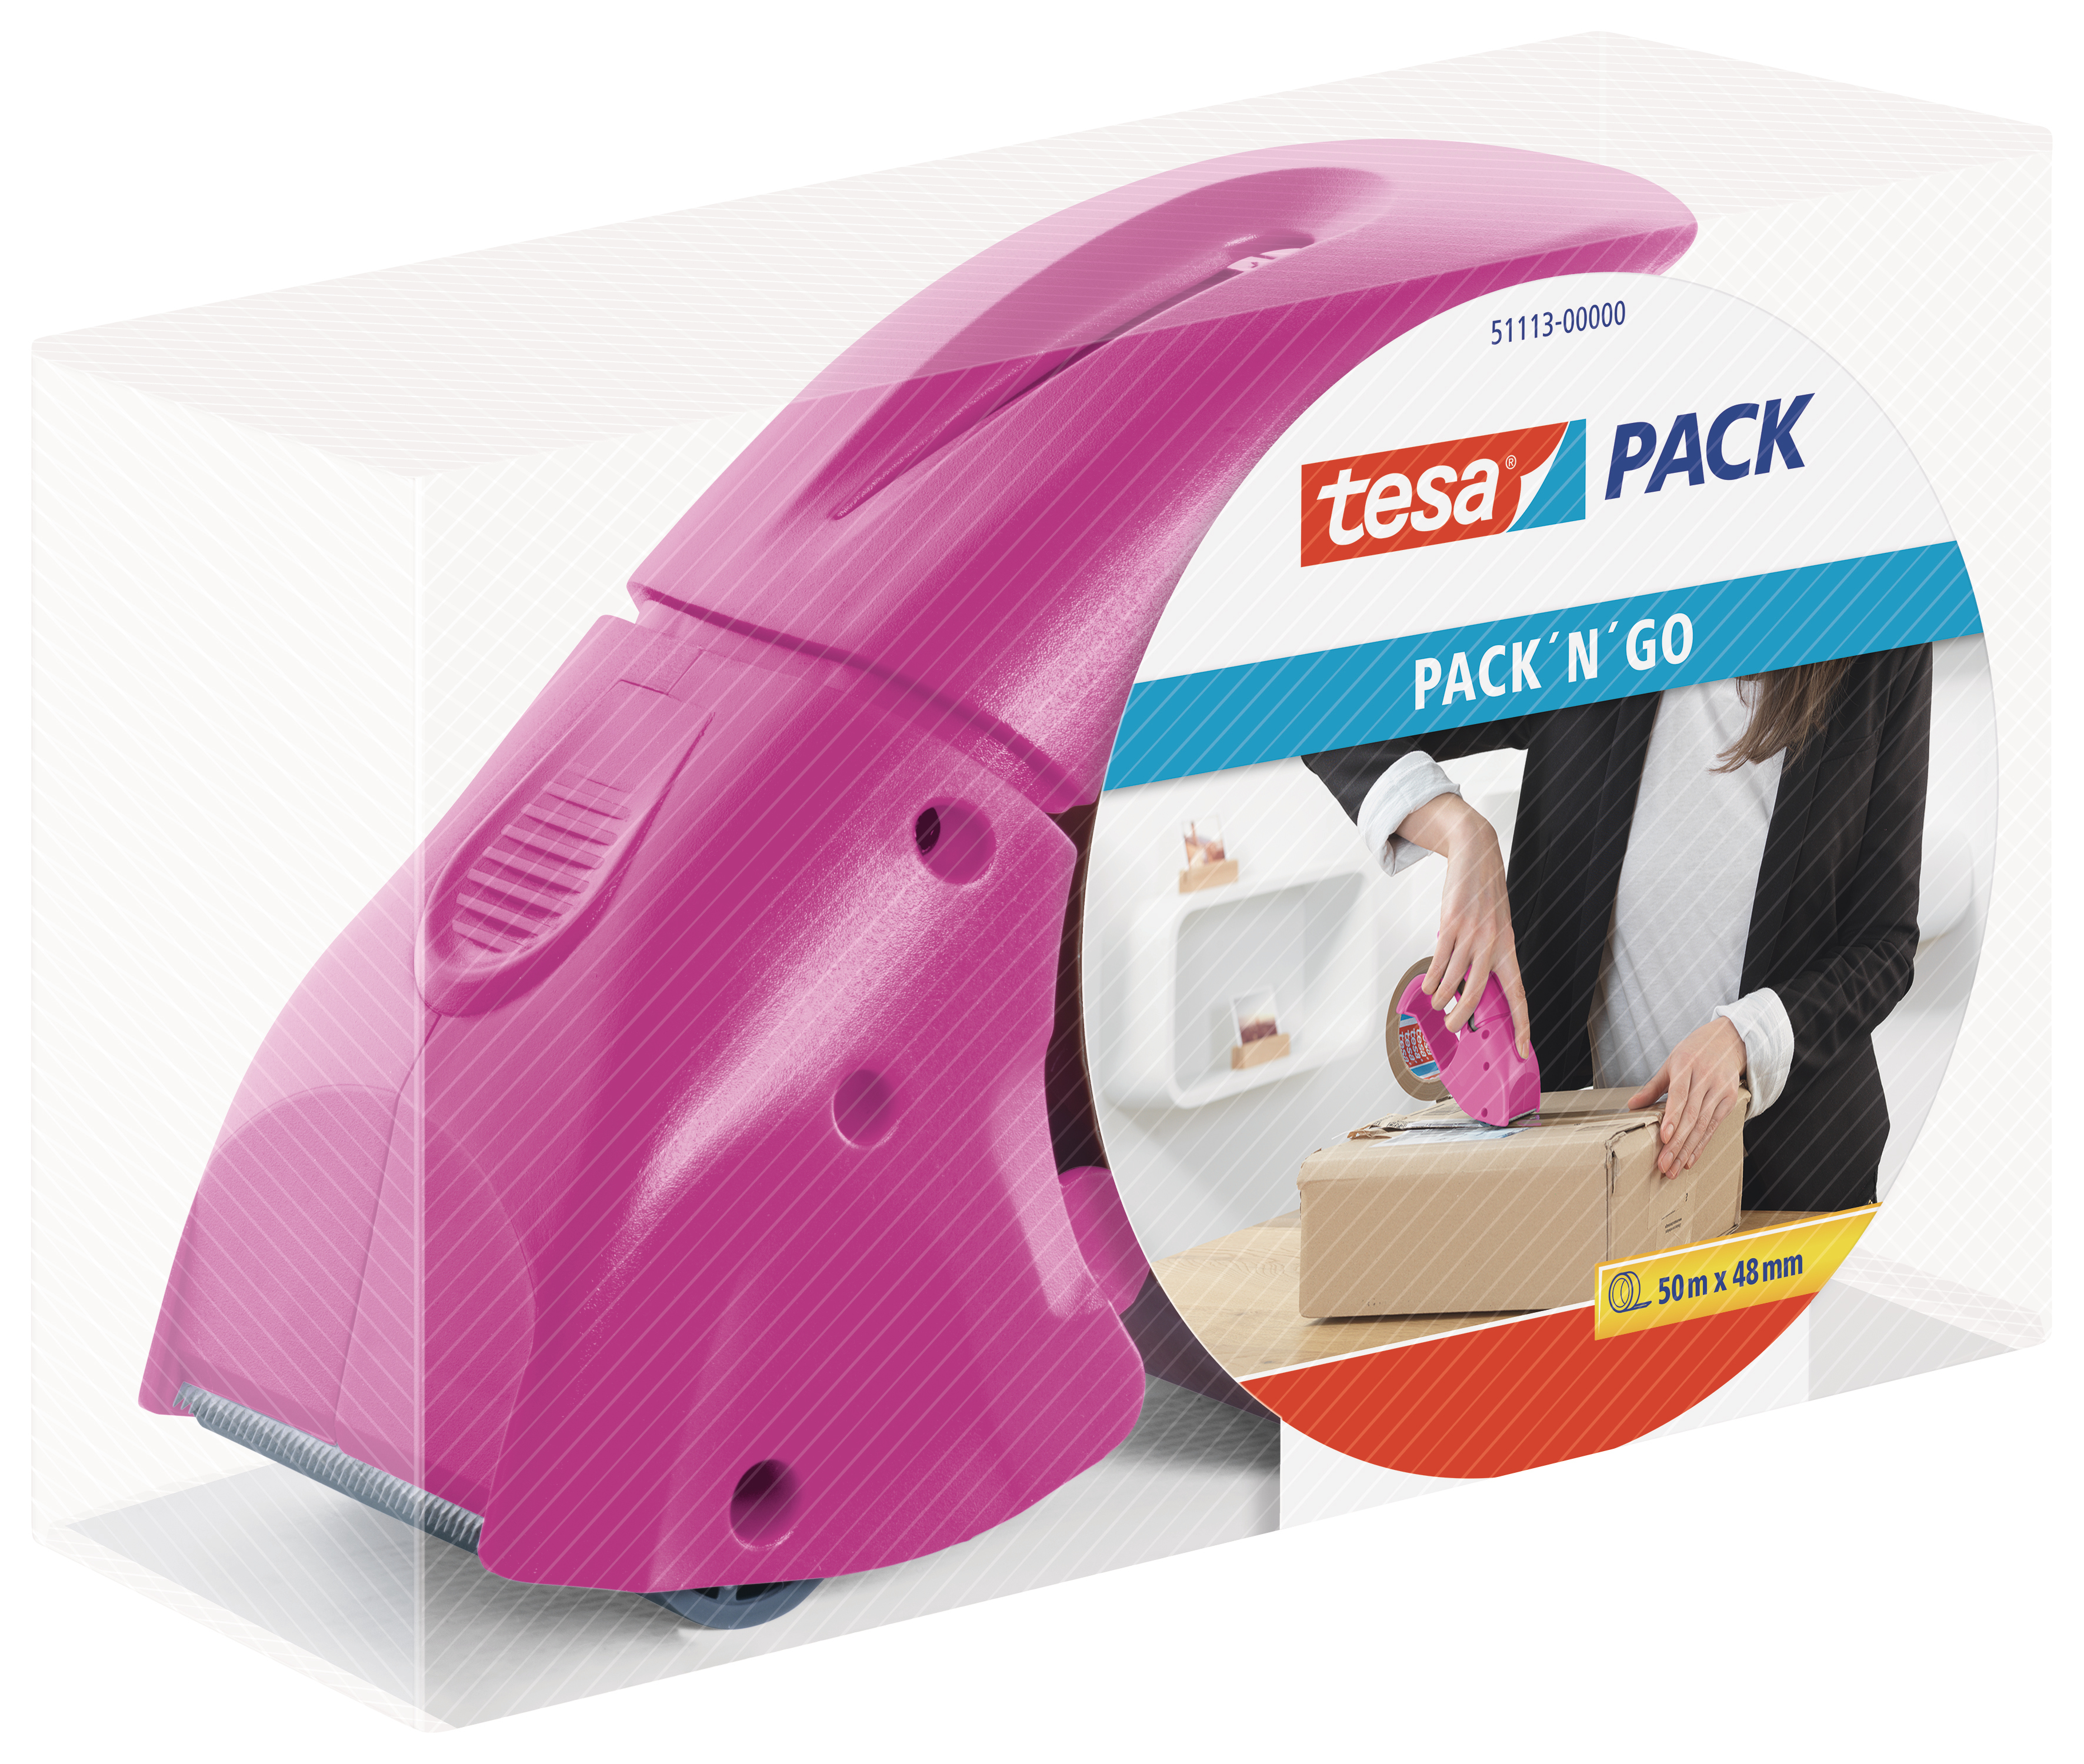 TESA Pack Dispenser 66mx50mm 511130000 Pack'n'go pink